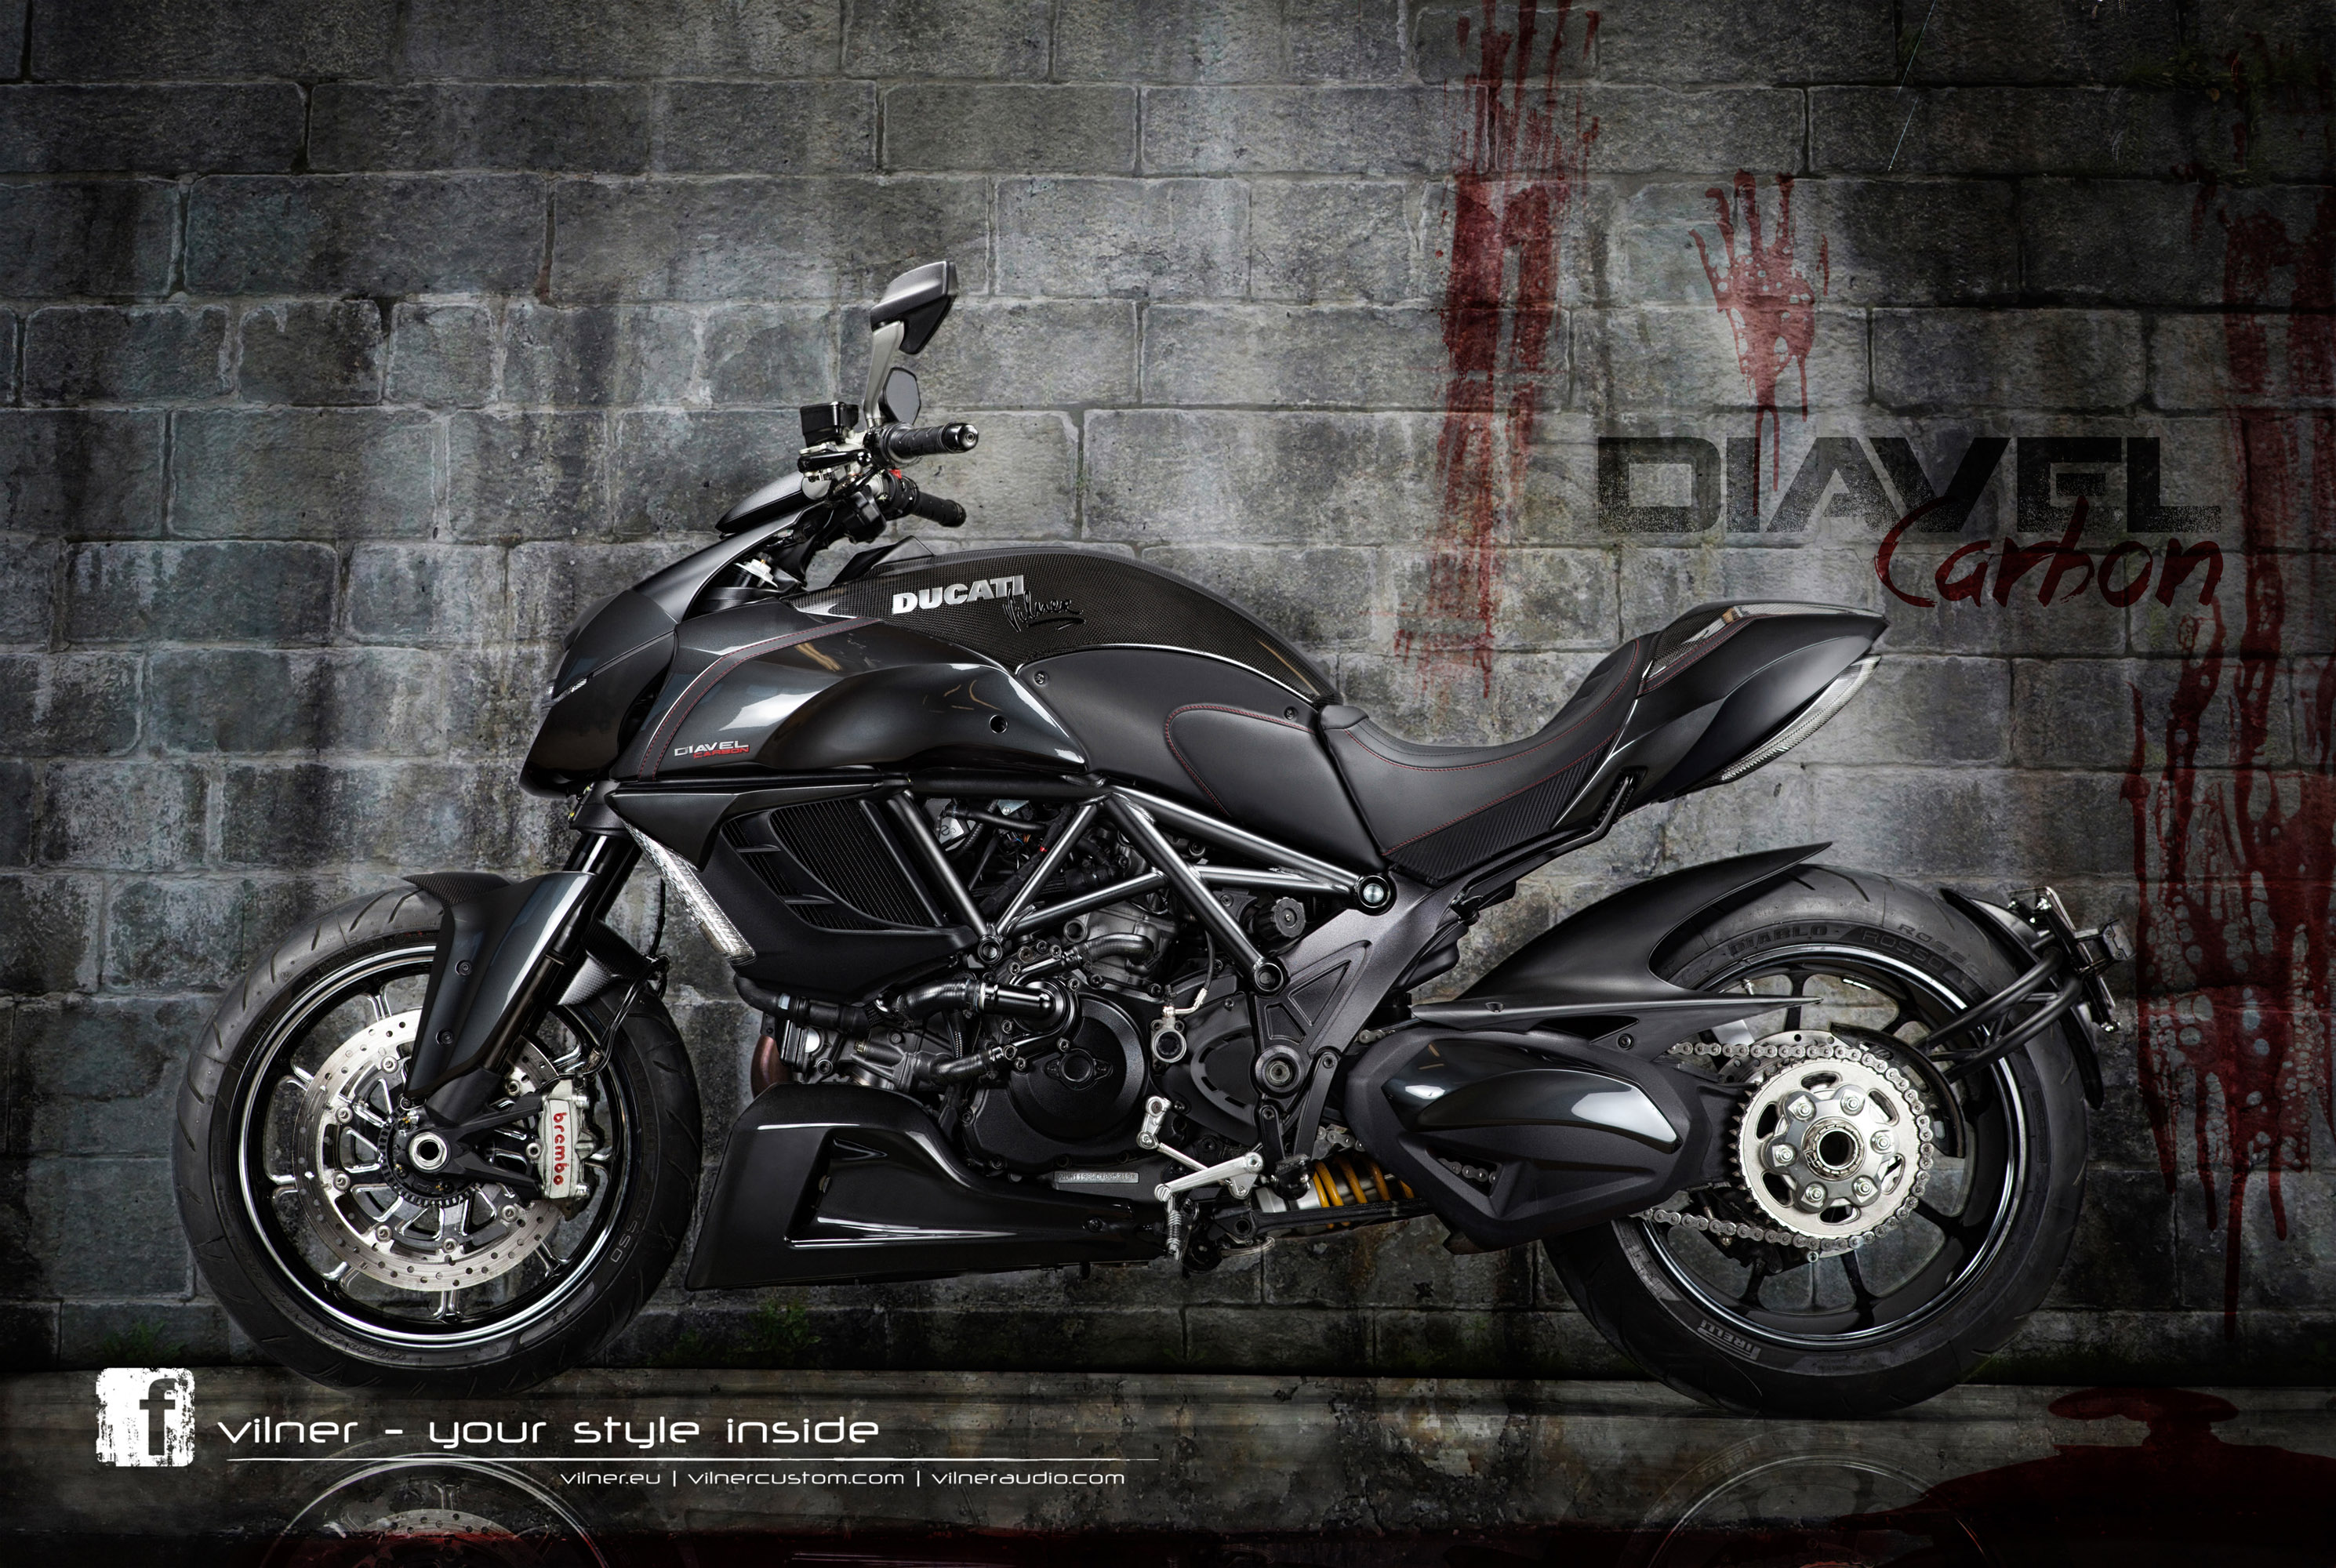 2013, Vilner, Ducati, Diavel, Superbike, Superbikes, Bike Wallpaper